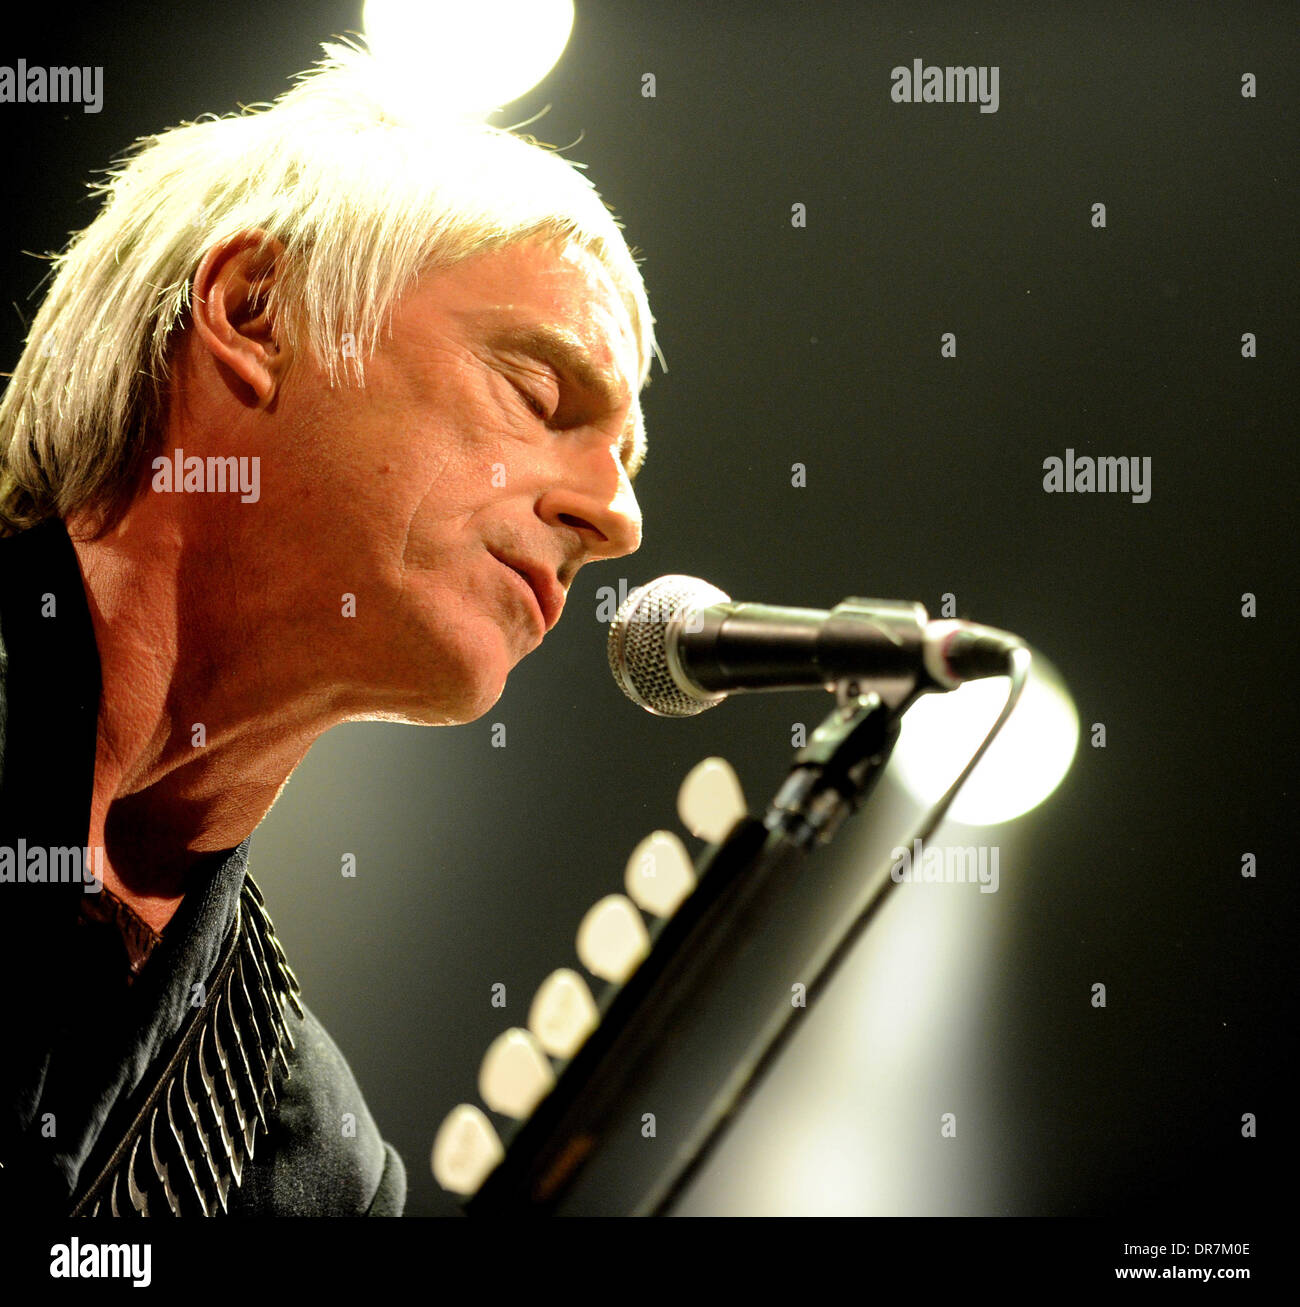 Paul Weller en live à l'Heineken Music Hall Amsterdam, Holland - 15.06.12 Banque D'Images